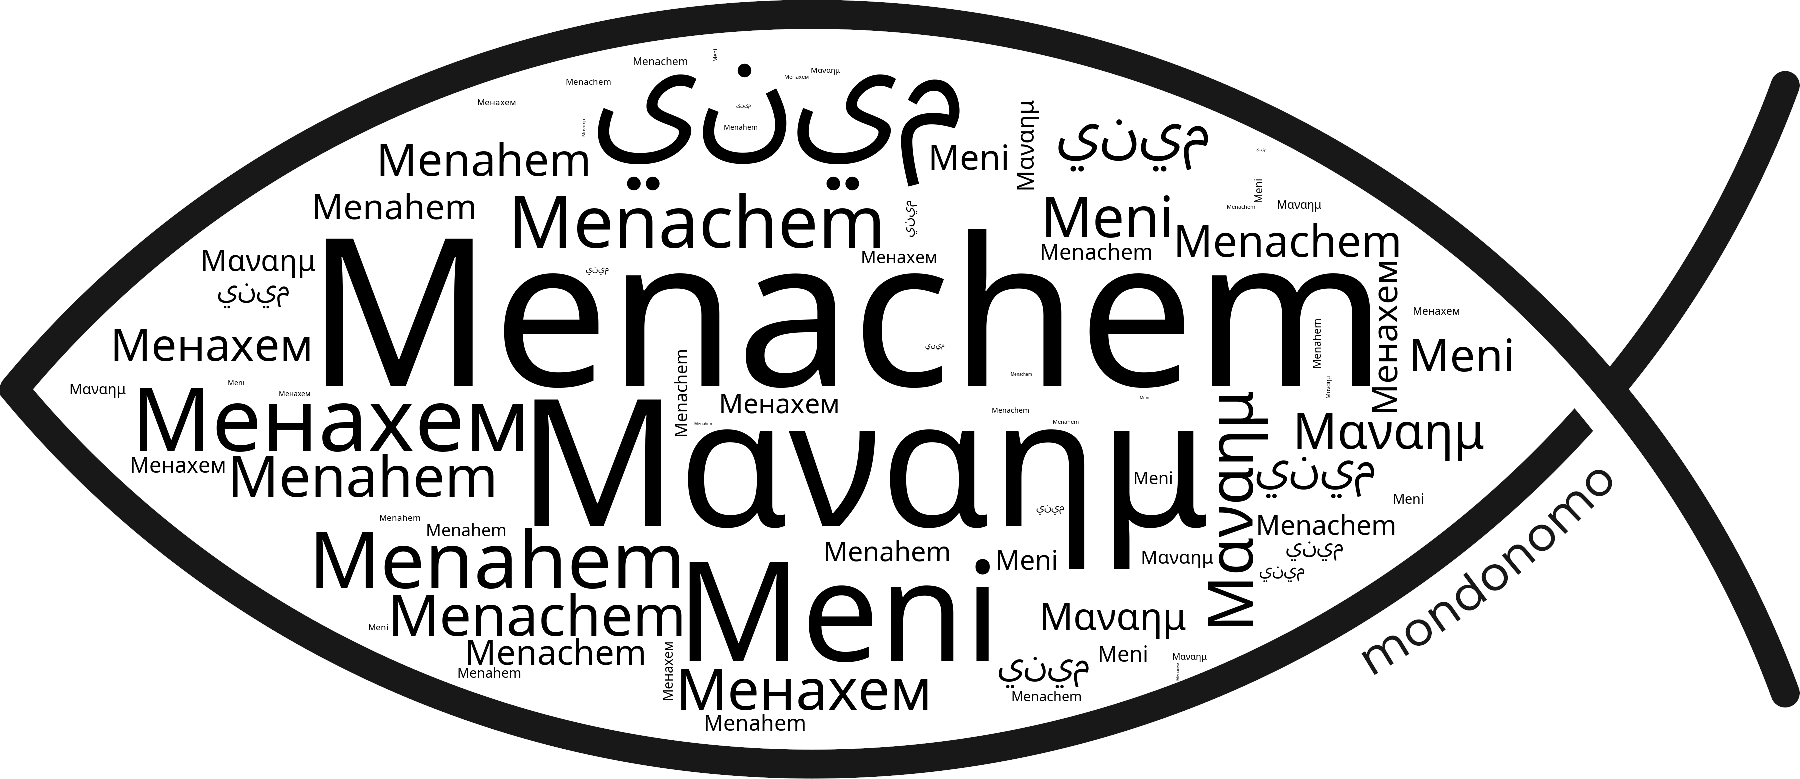 Name Menachem in the world's Bibles